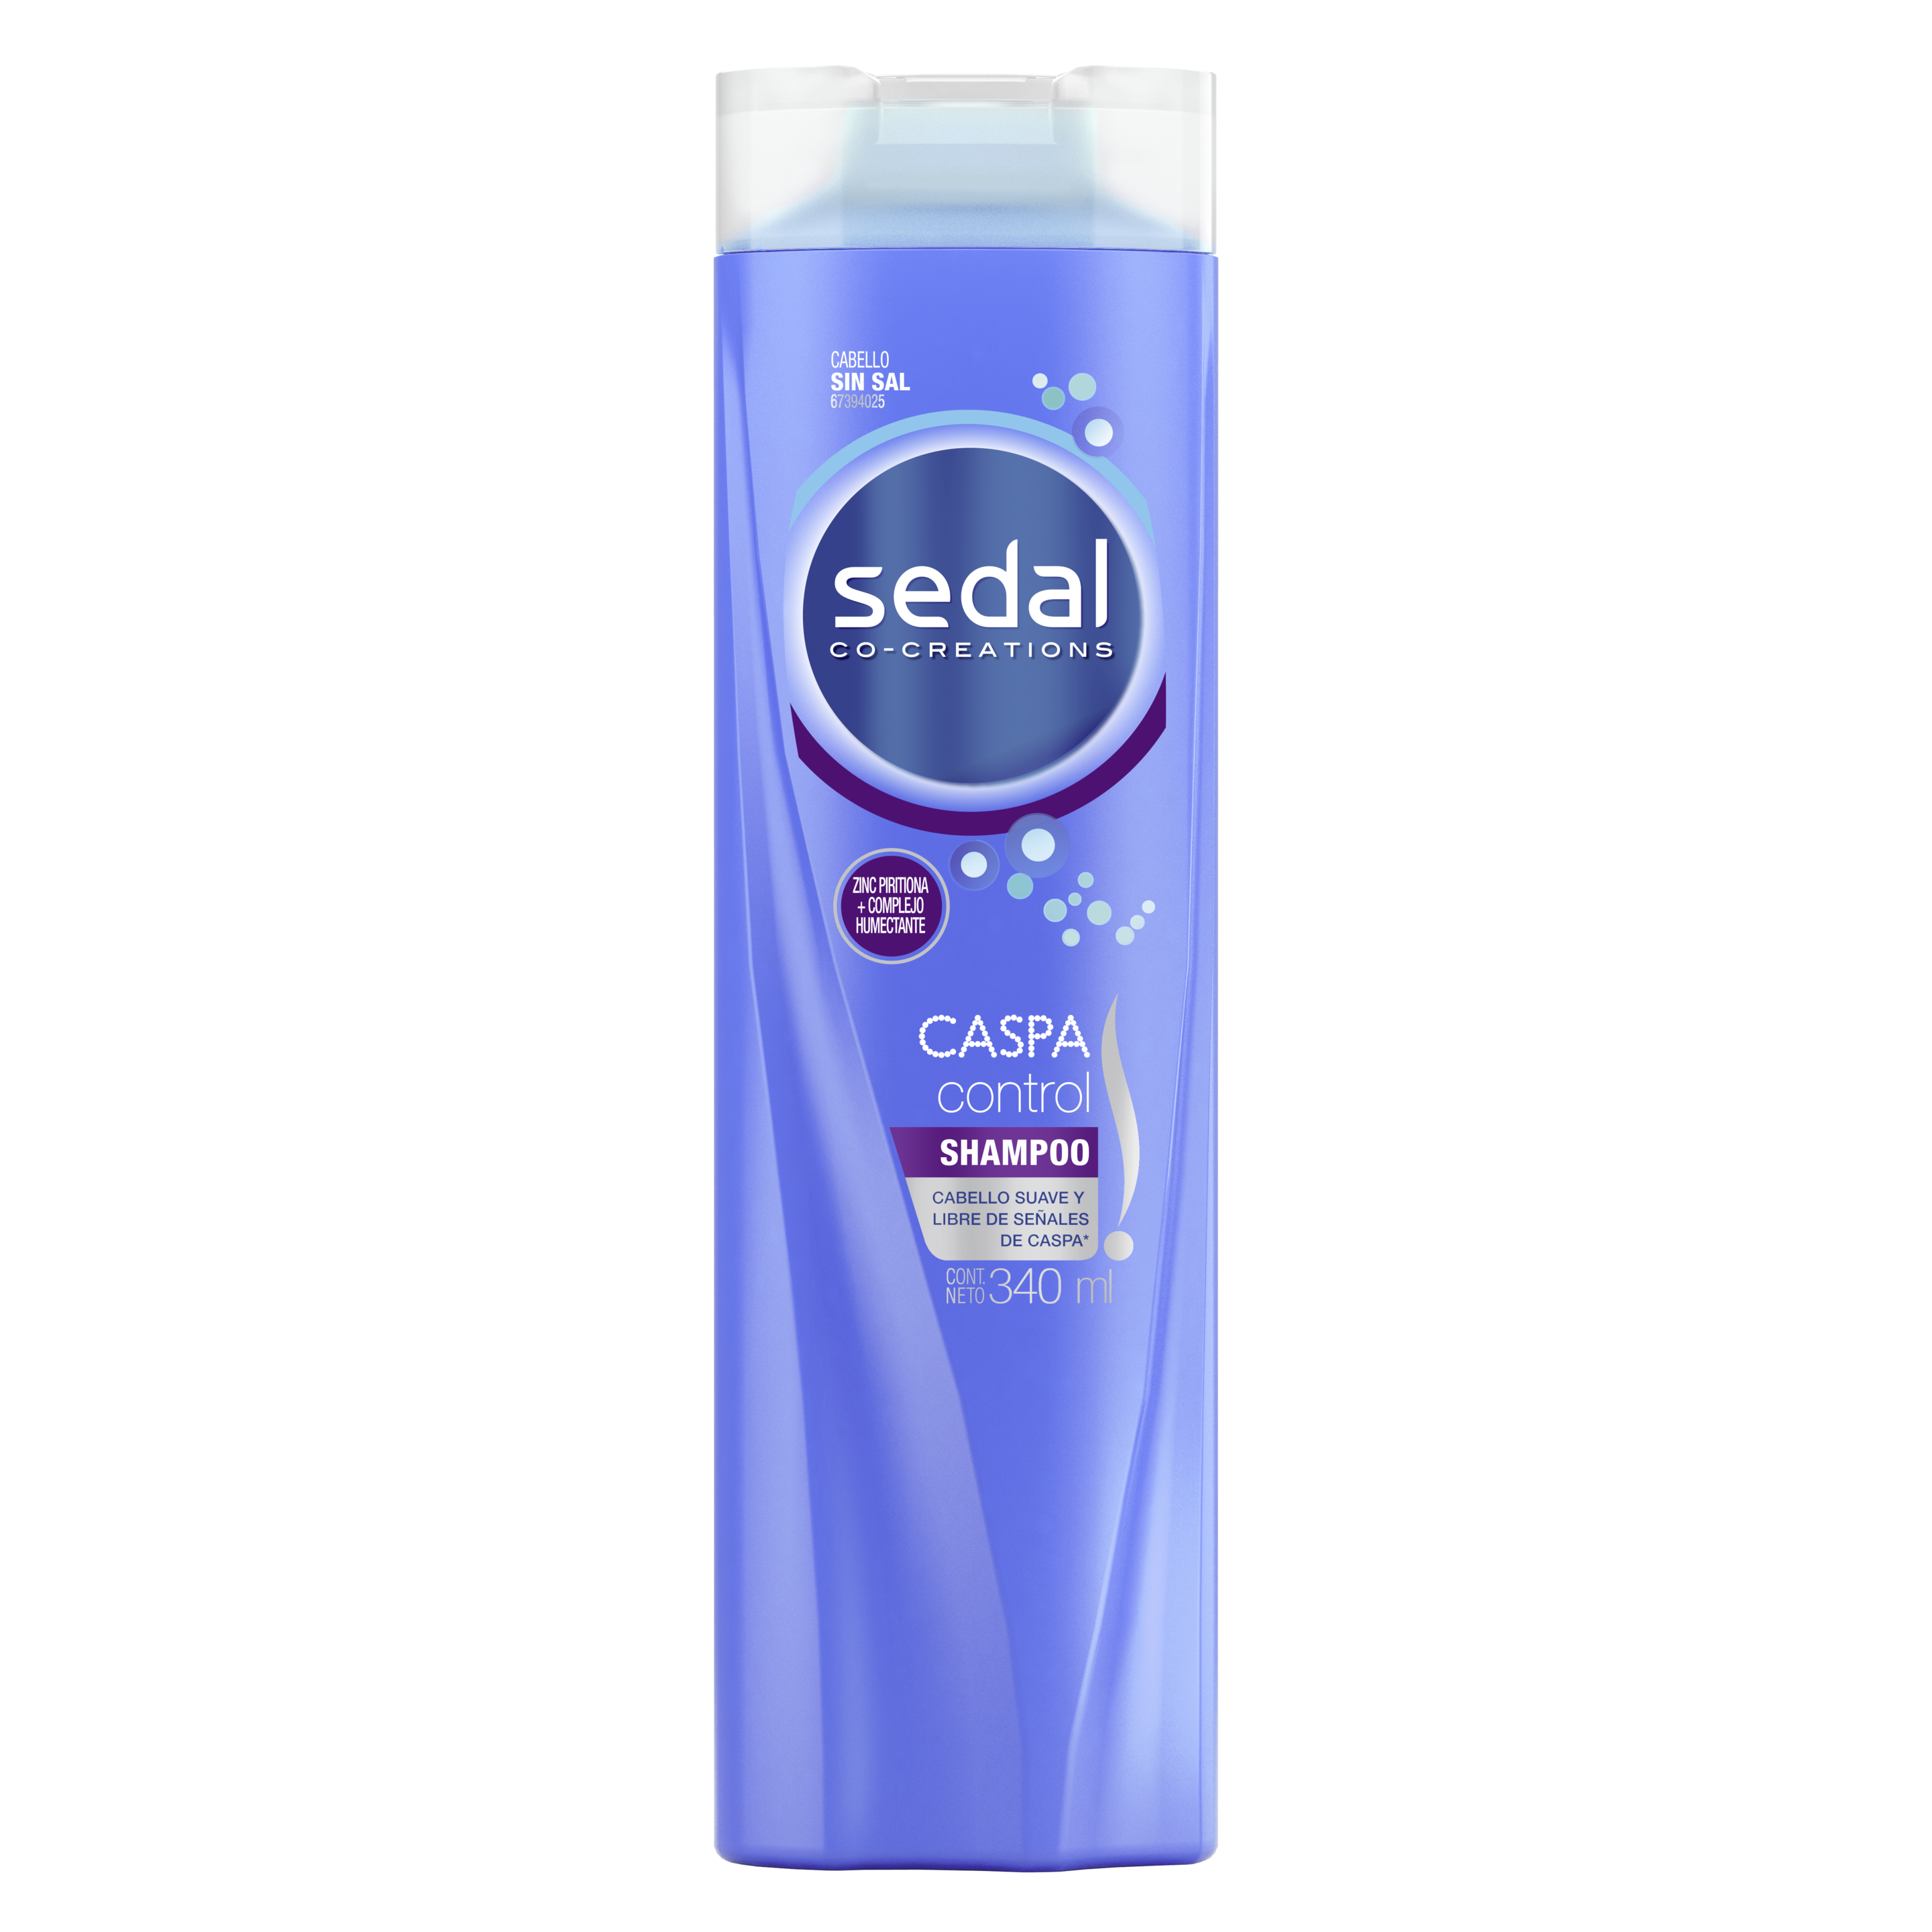 Imagen de envase Sedal Caspa Control Shampoo 340ml